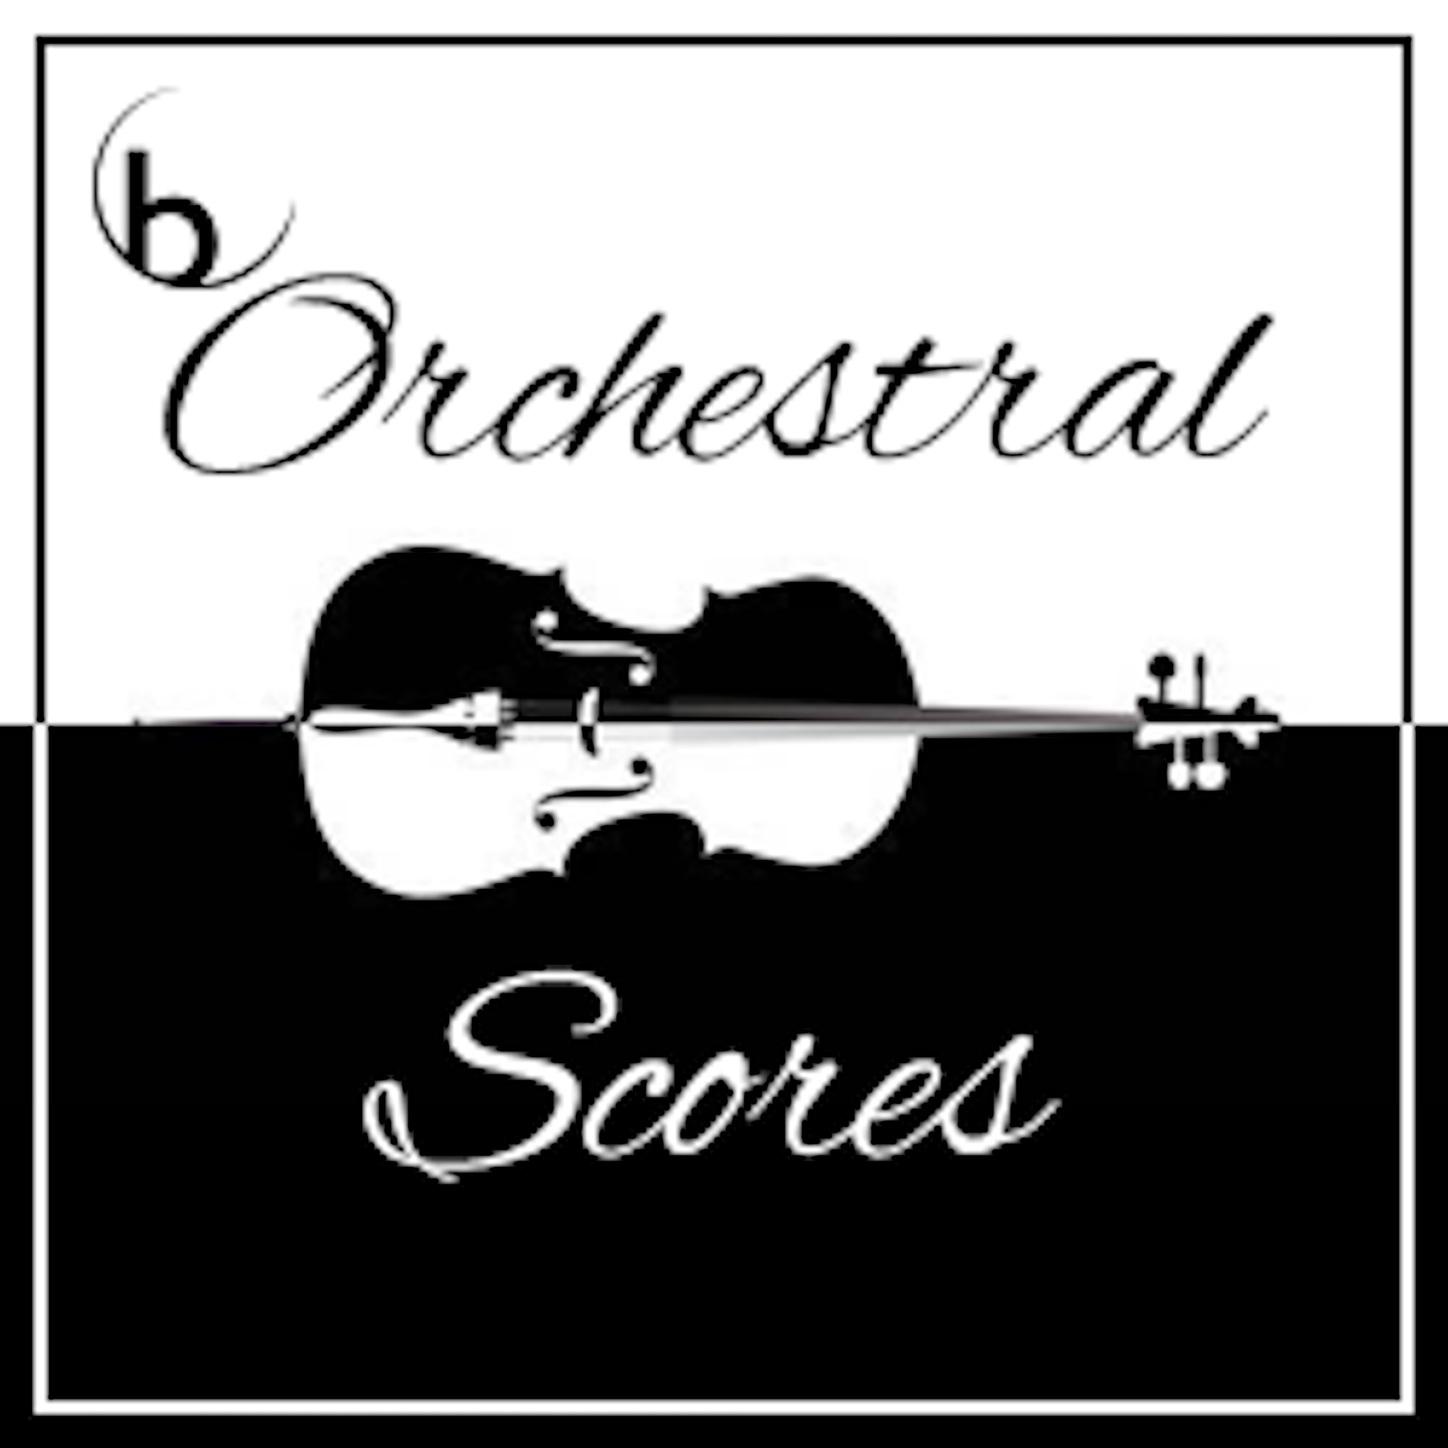 Orchestral Scores